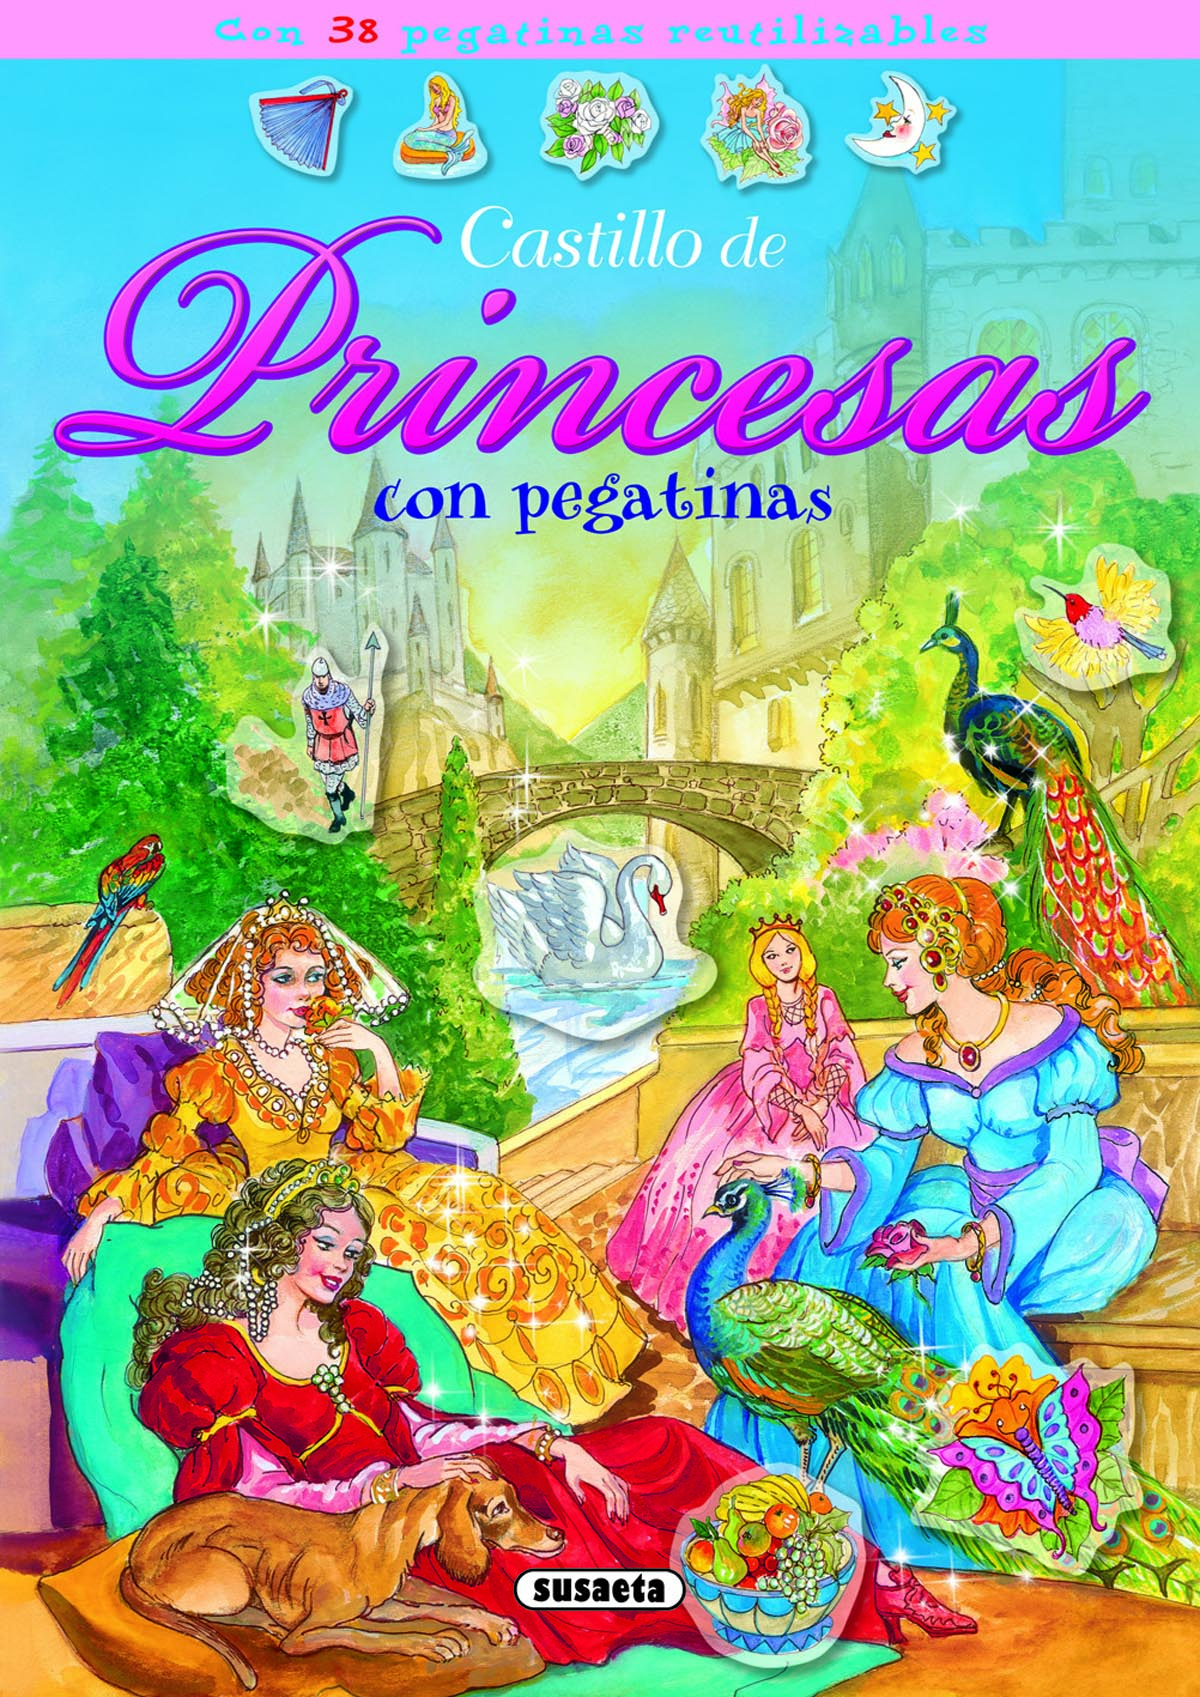 Castillo de princesas con pegatinas